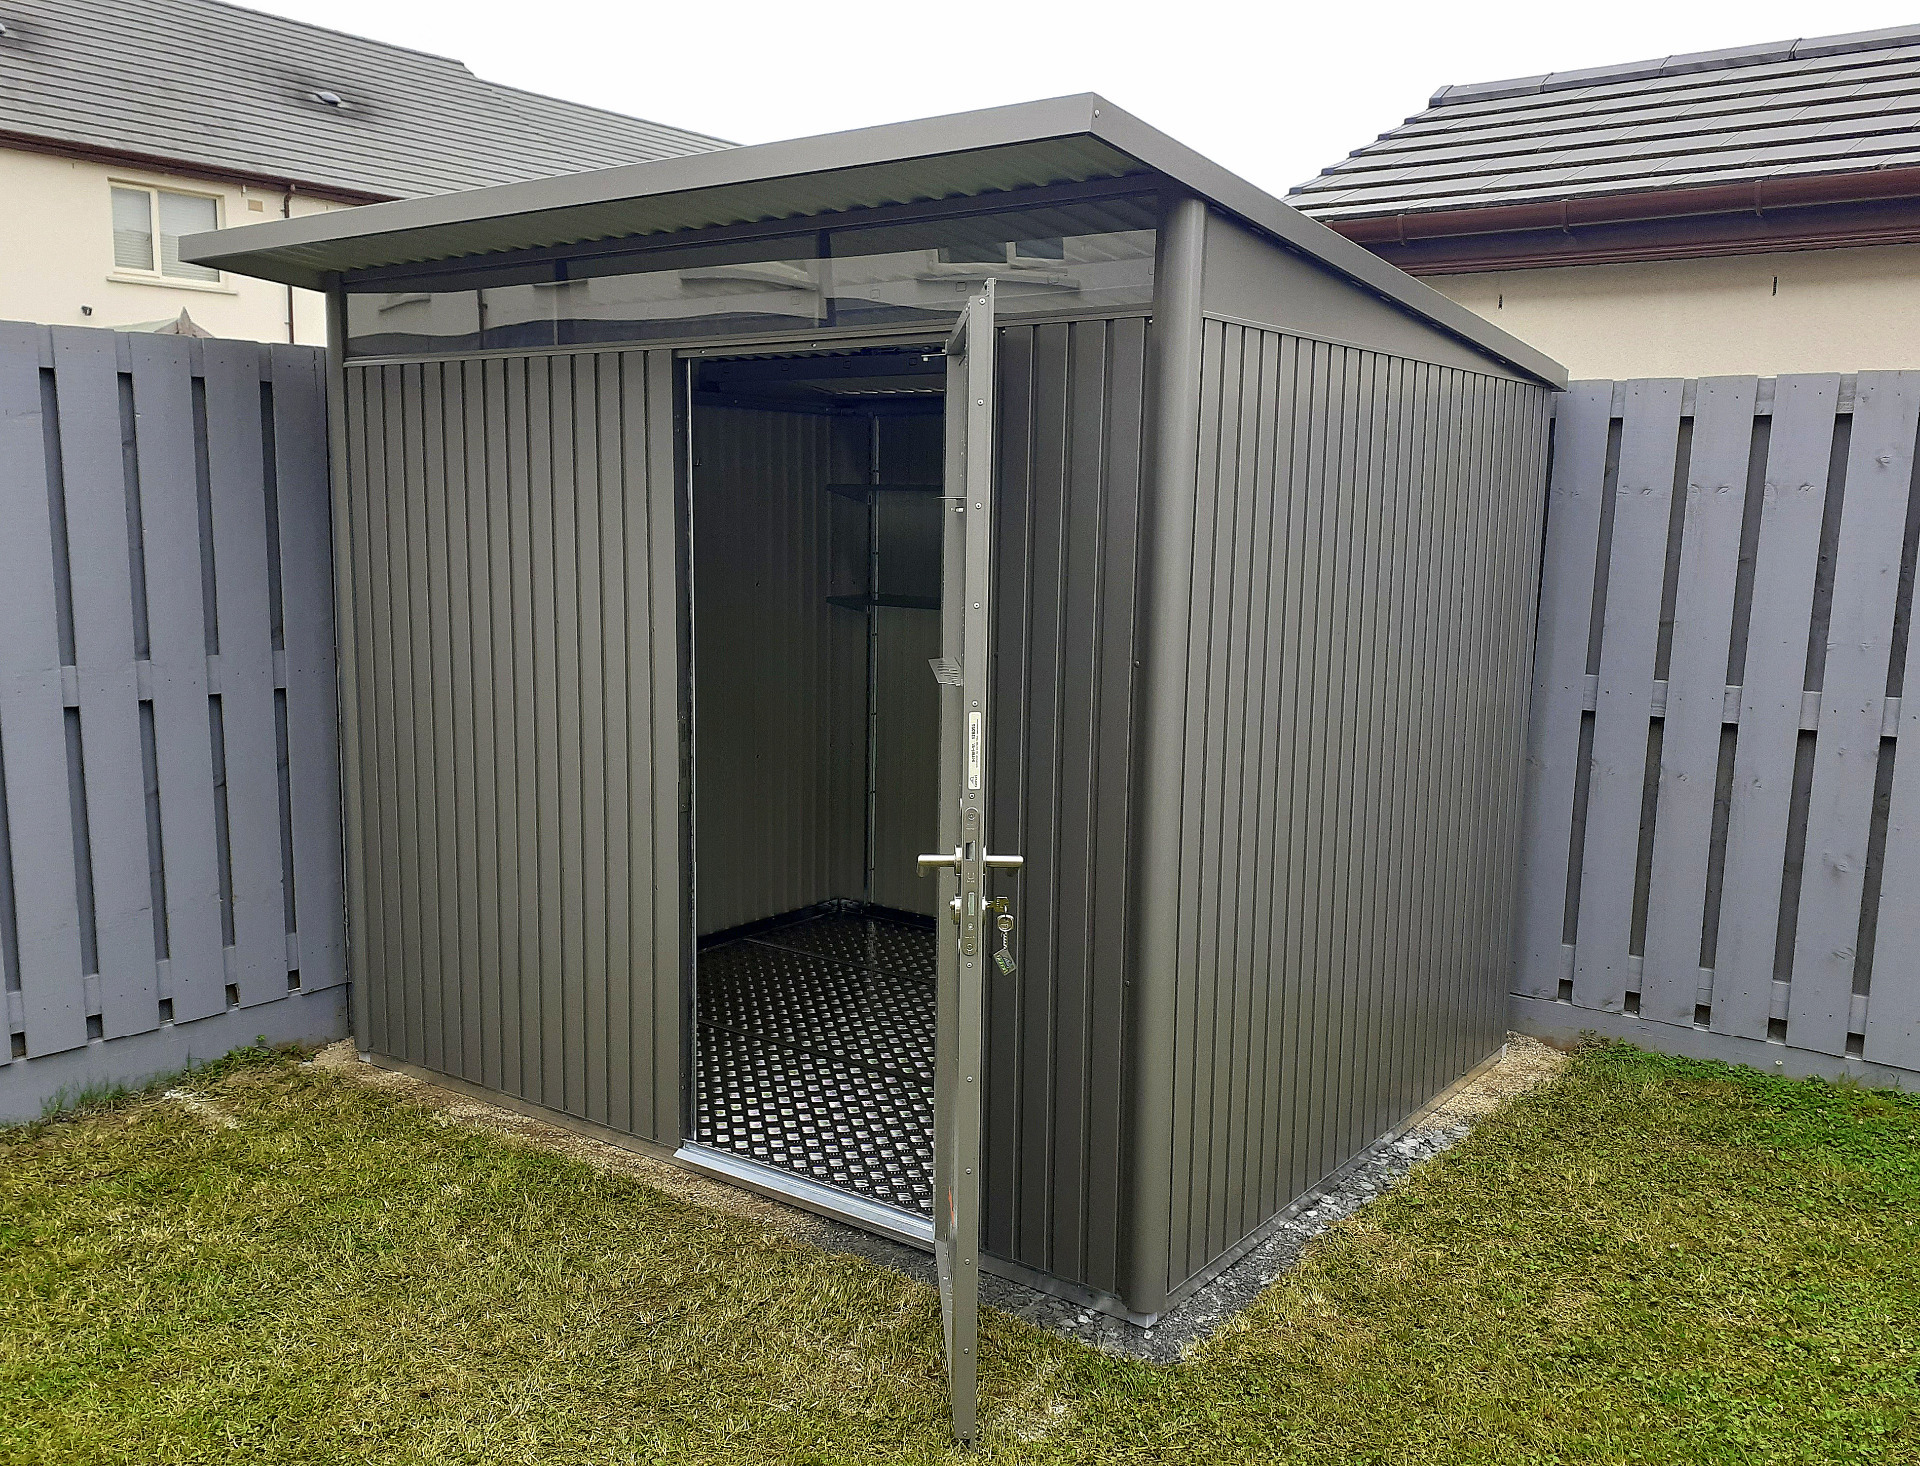 Biohort AvantGarde A6 Steel garden shed in metallic quartz grey | The stylish & secure way to store your garden items